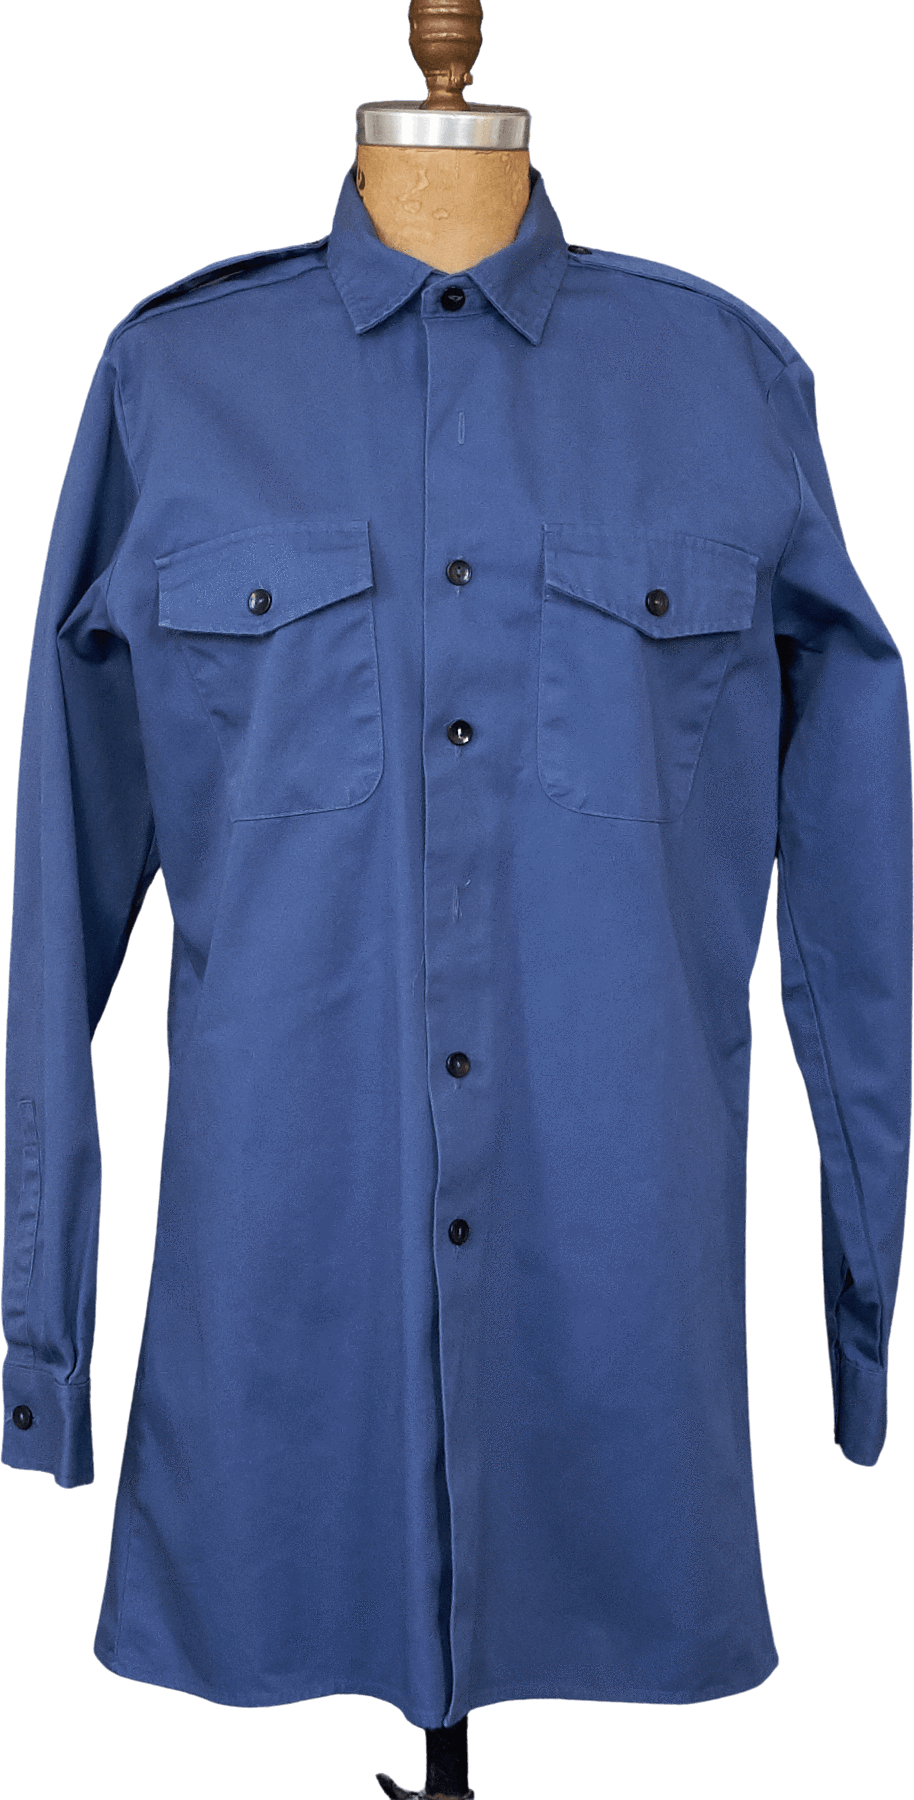 Vintage Royal Navy Work Shirt | Shop THRILLING